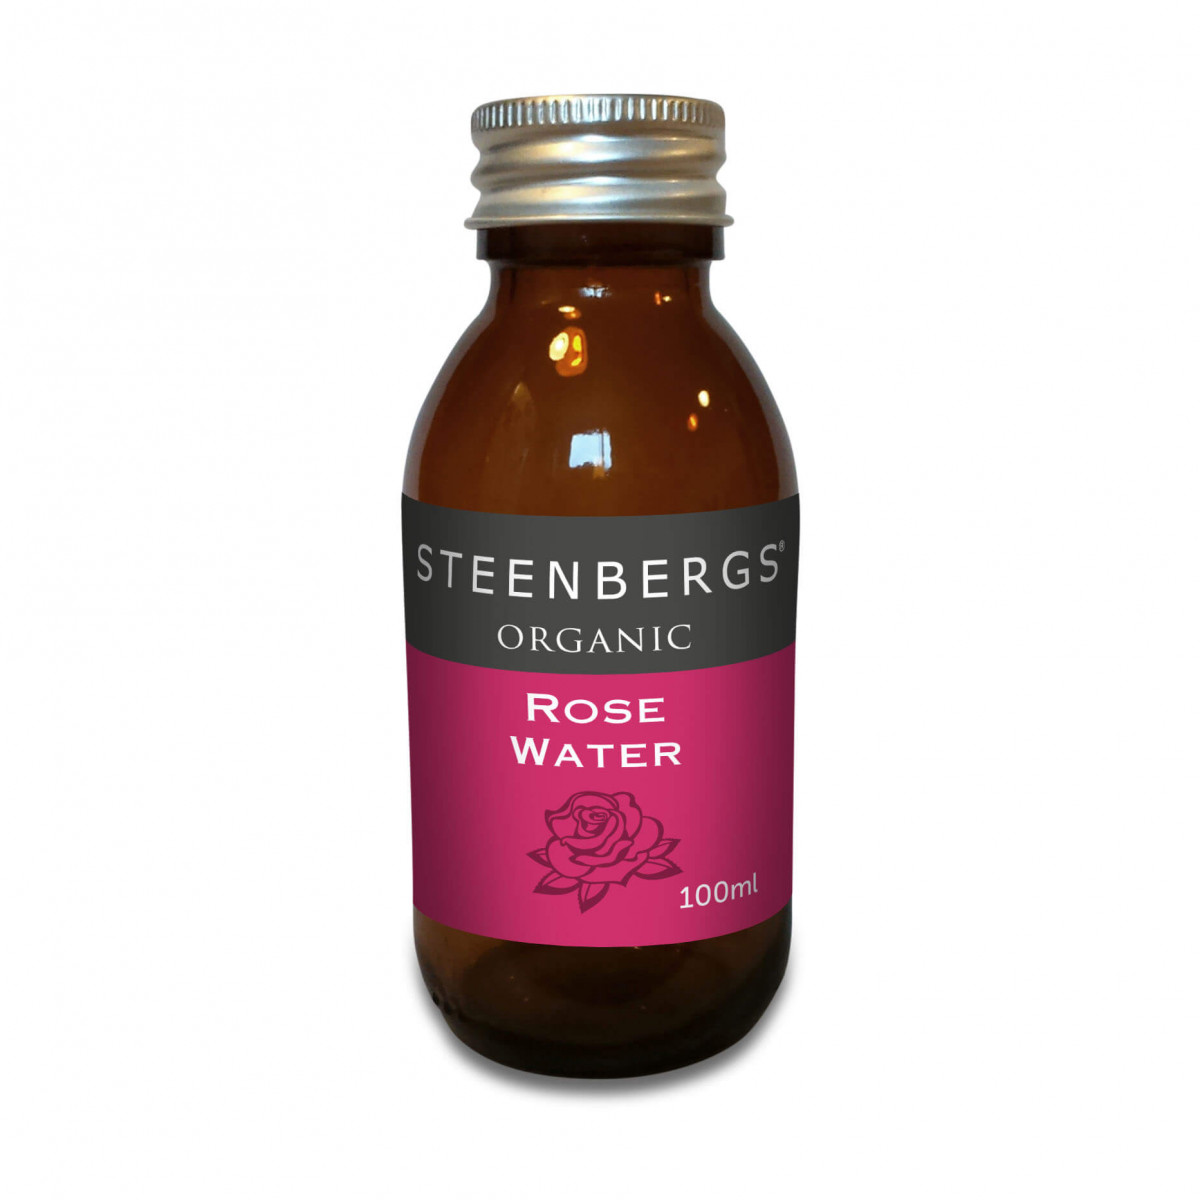 Steenbergs organic rose water